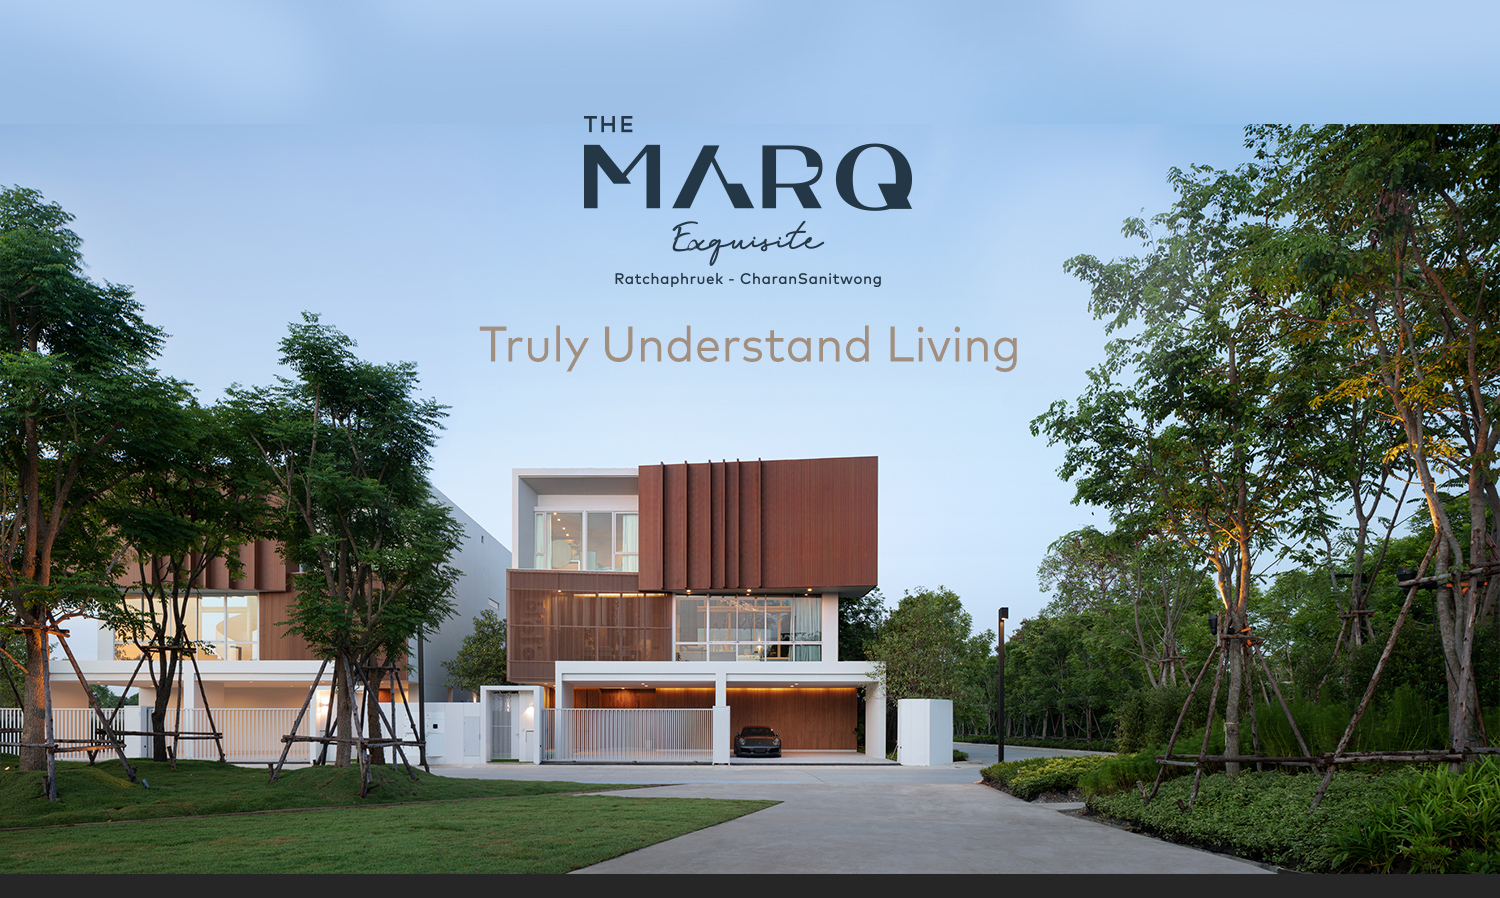 the-marq-exquisite-ราชพฤกษ์-จรัญสนิทวงศ์-บ้านเดี่ยวระดับลักซ์ชัวรี่-ผสานแนวคิดนักจัดบ้านระดับโลก